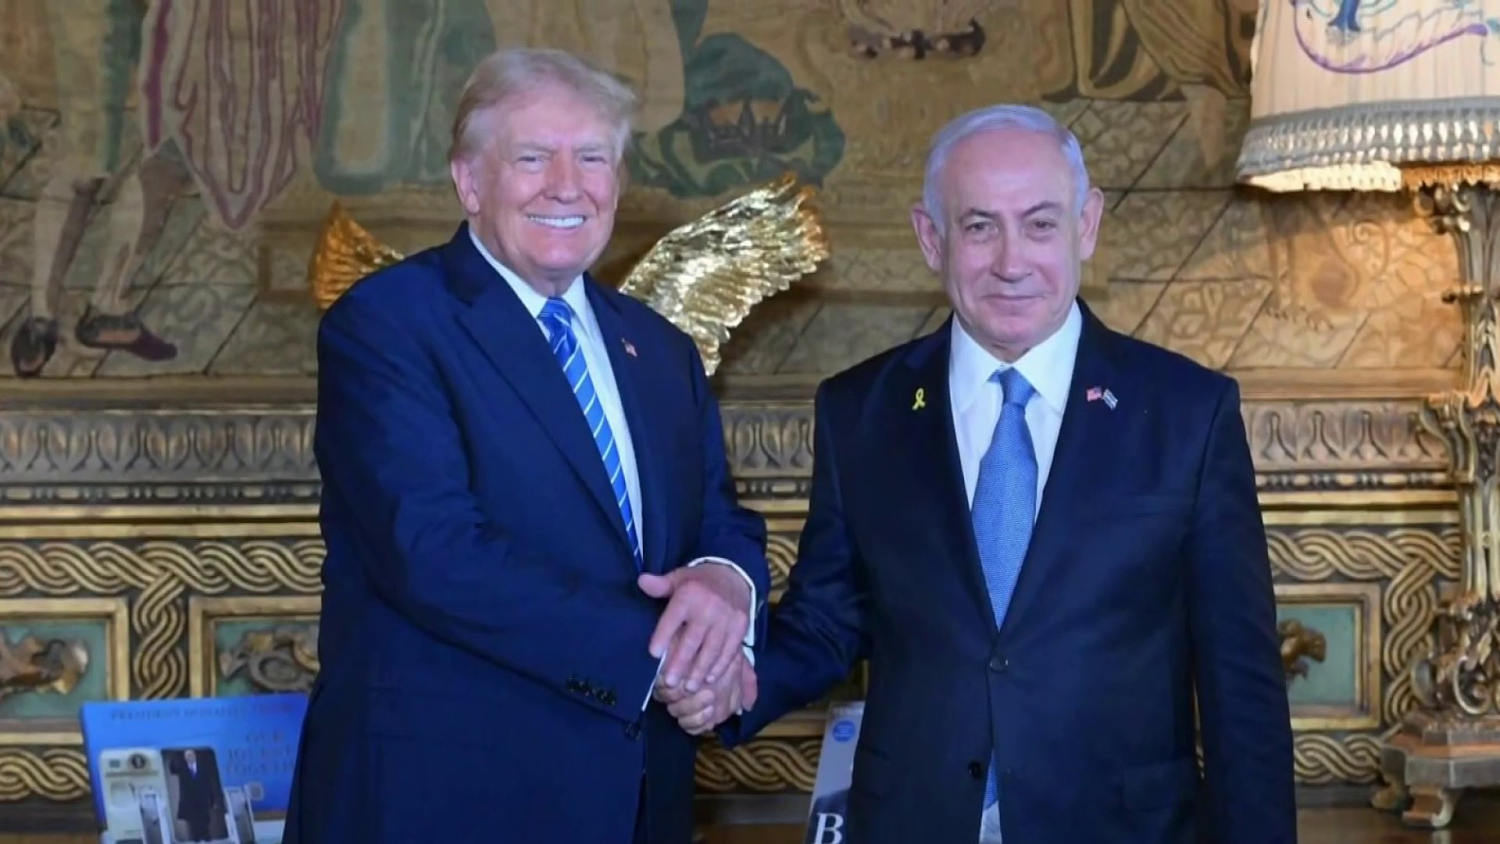 Netanyahu prolongs U.S. trip for Trump visit